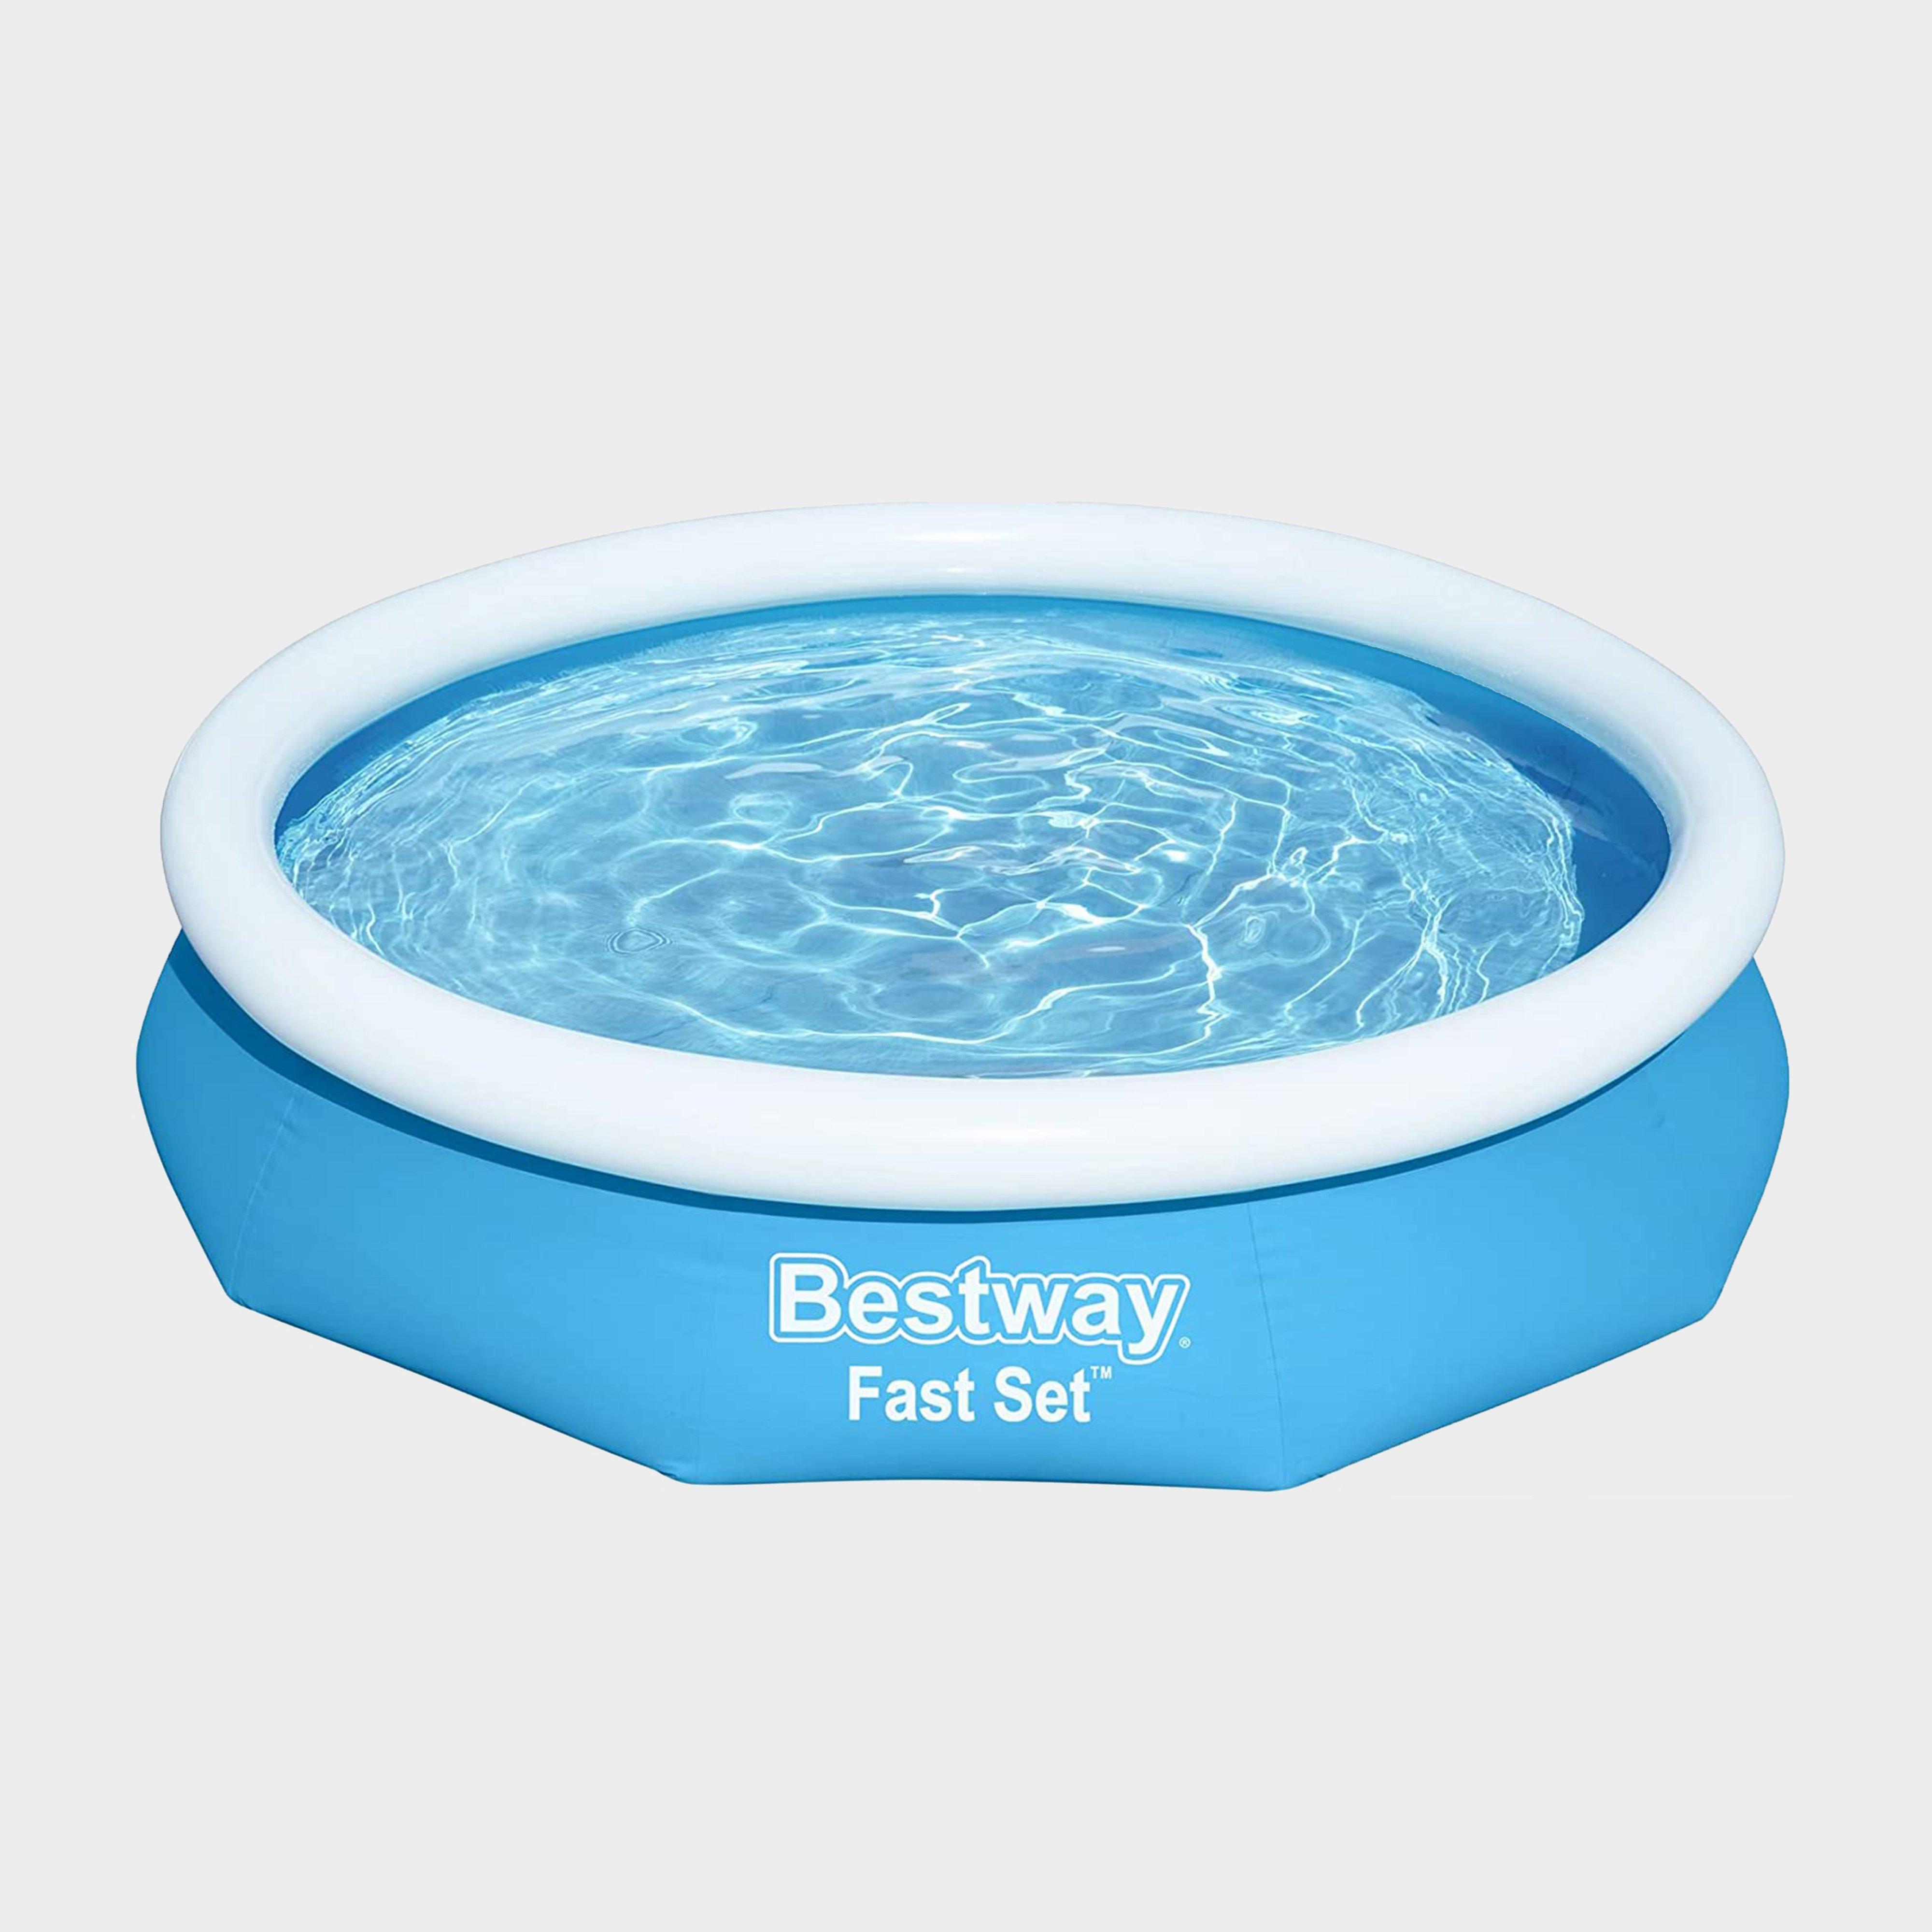  Bestway Fast Set 10 x 26 Pool Set, Blue